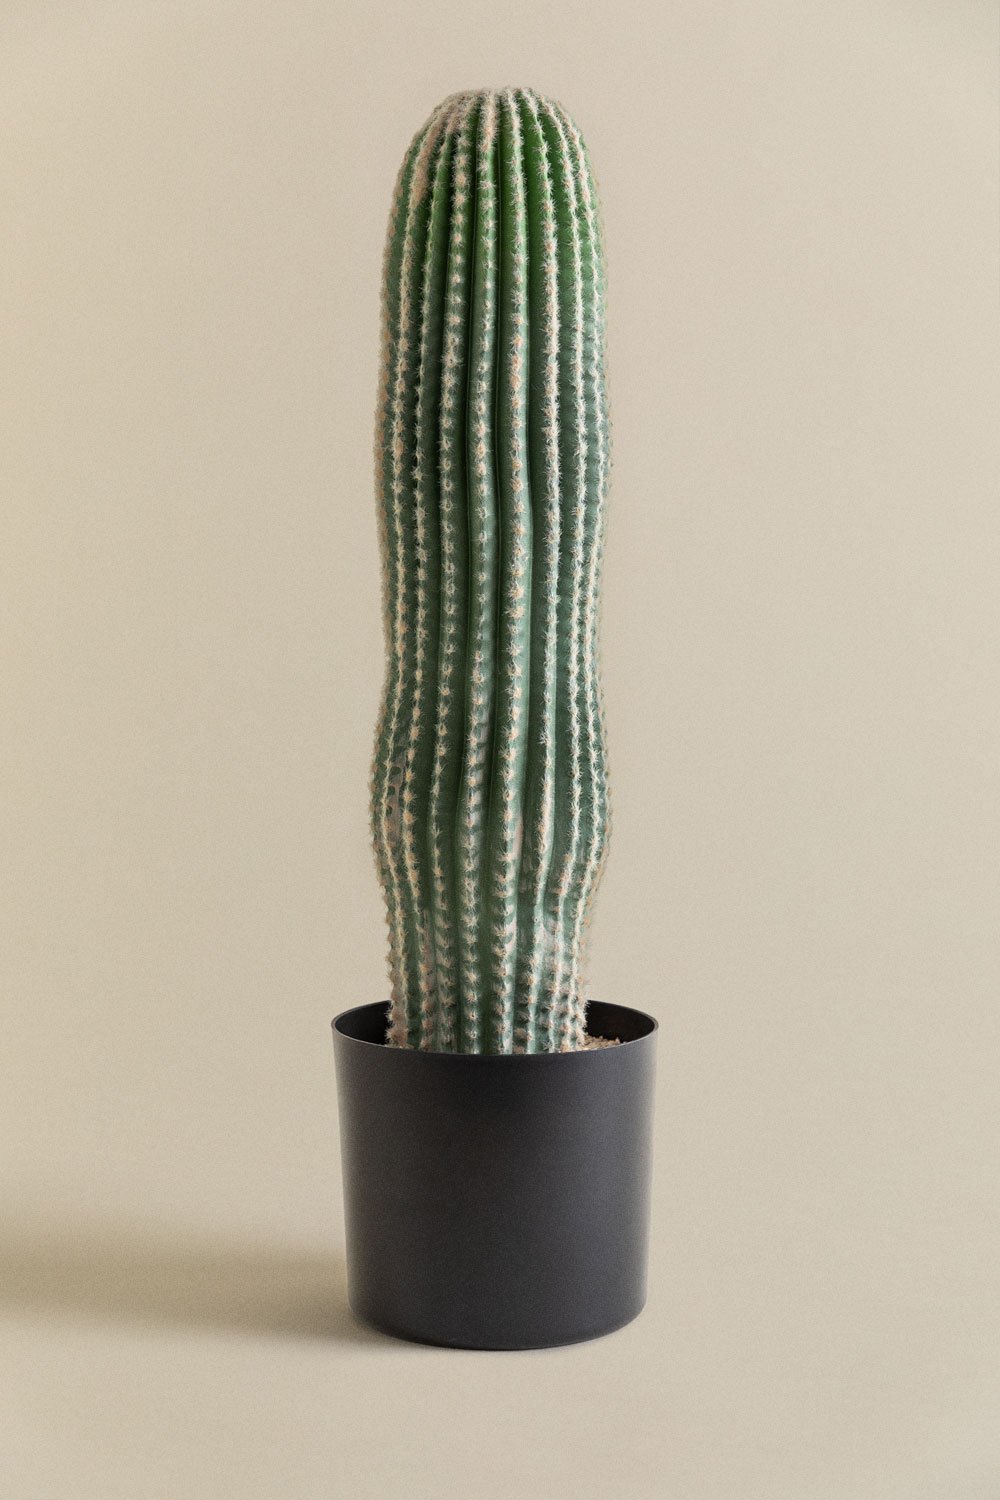 Cactus Artificial Carnegiea 72 cm, gallery image 1